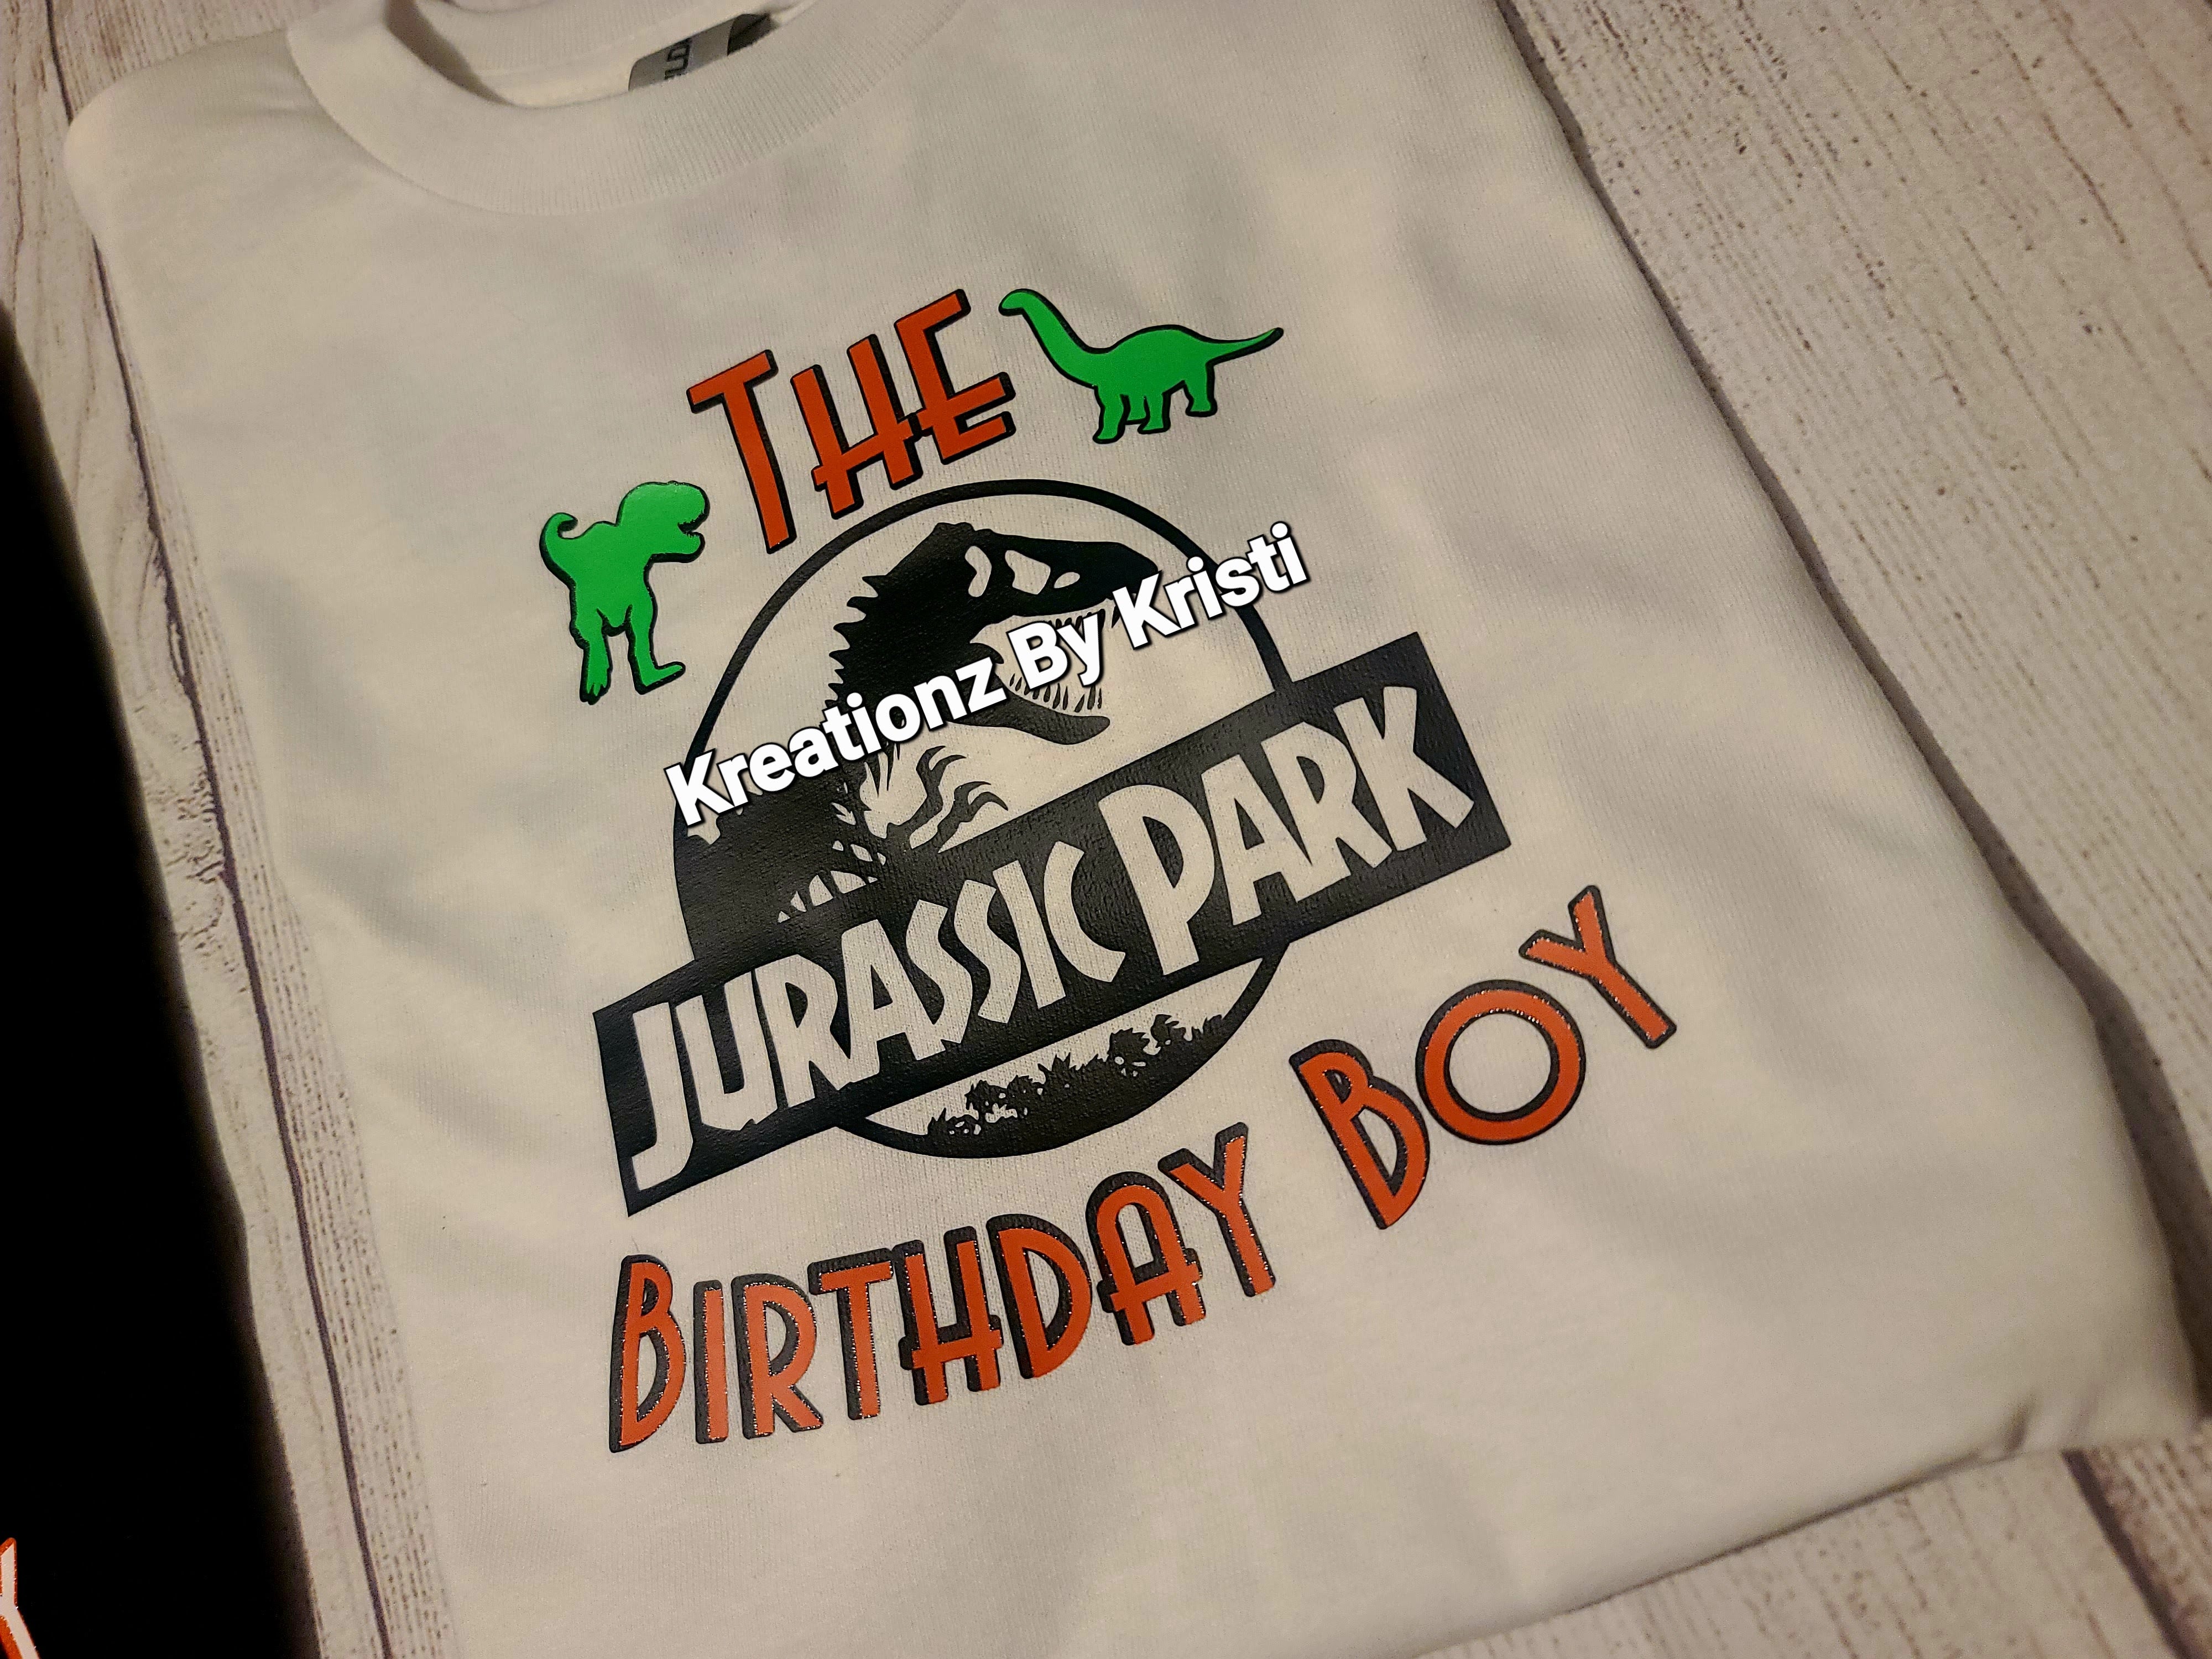 Custom Jurassic Park birthday shirt - Bleached Tees - Sweatshirts - Sublimination T-Shirts